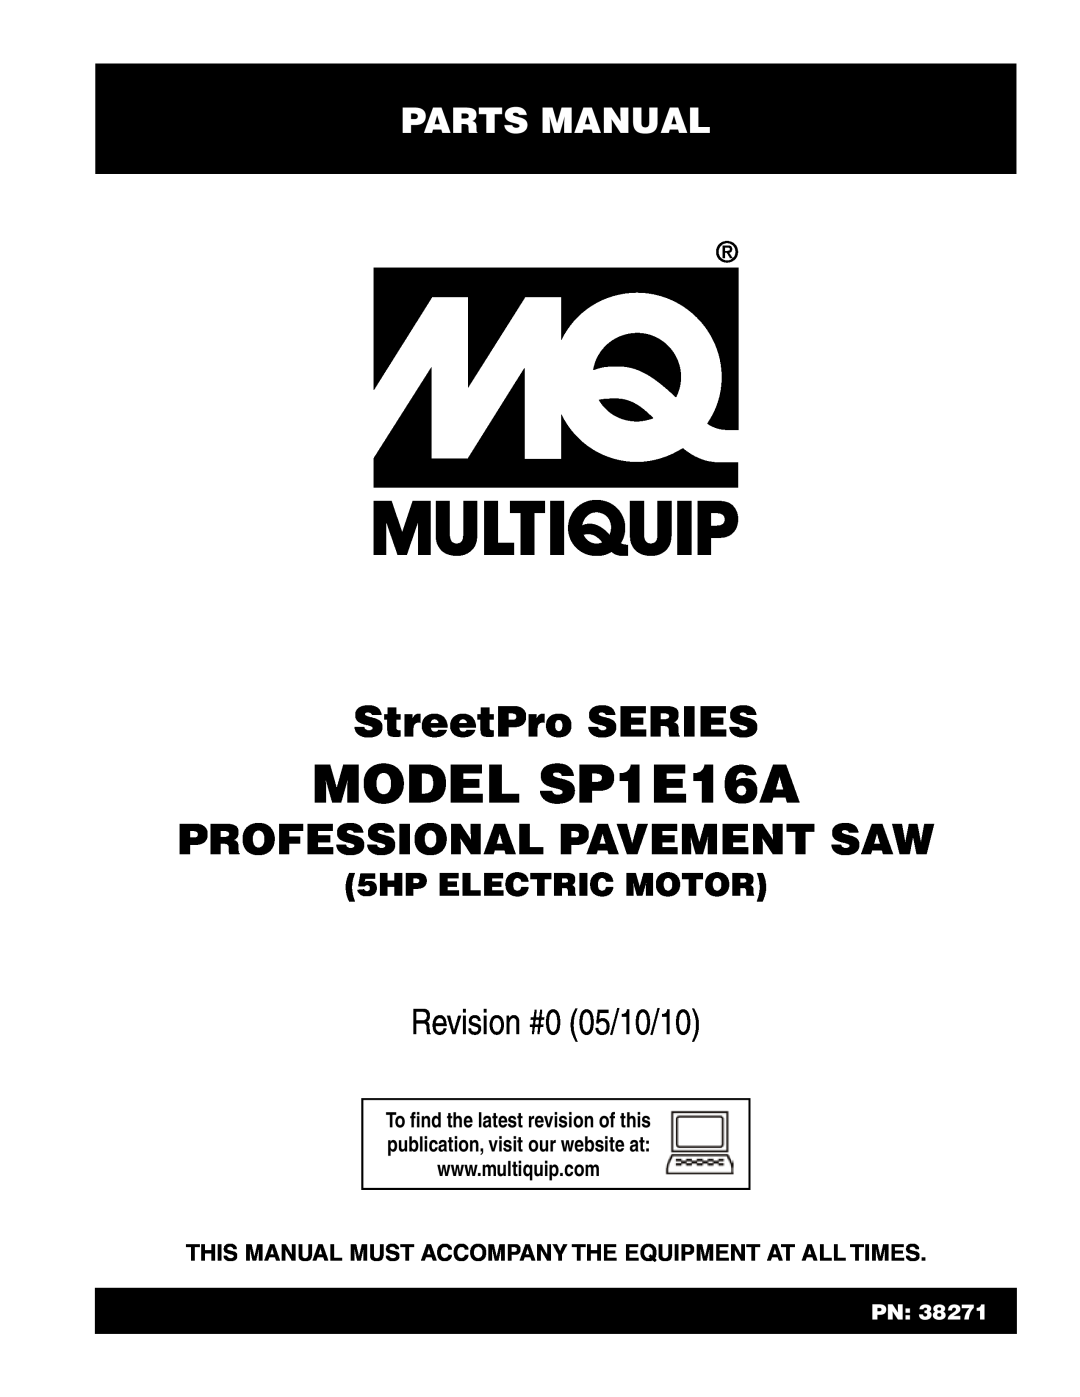 Multiquip SP1E16A manual Parts Manual, MODEL sp1e16a, StreetPro SERIES, professional pavement saw, Revision #0 05/10/10 